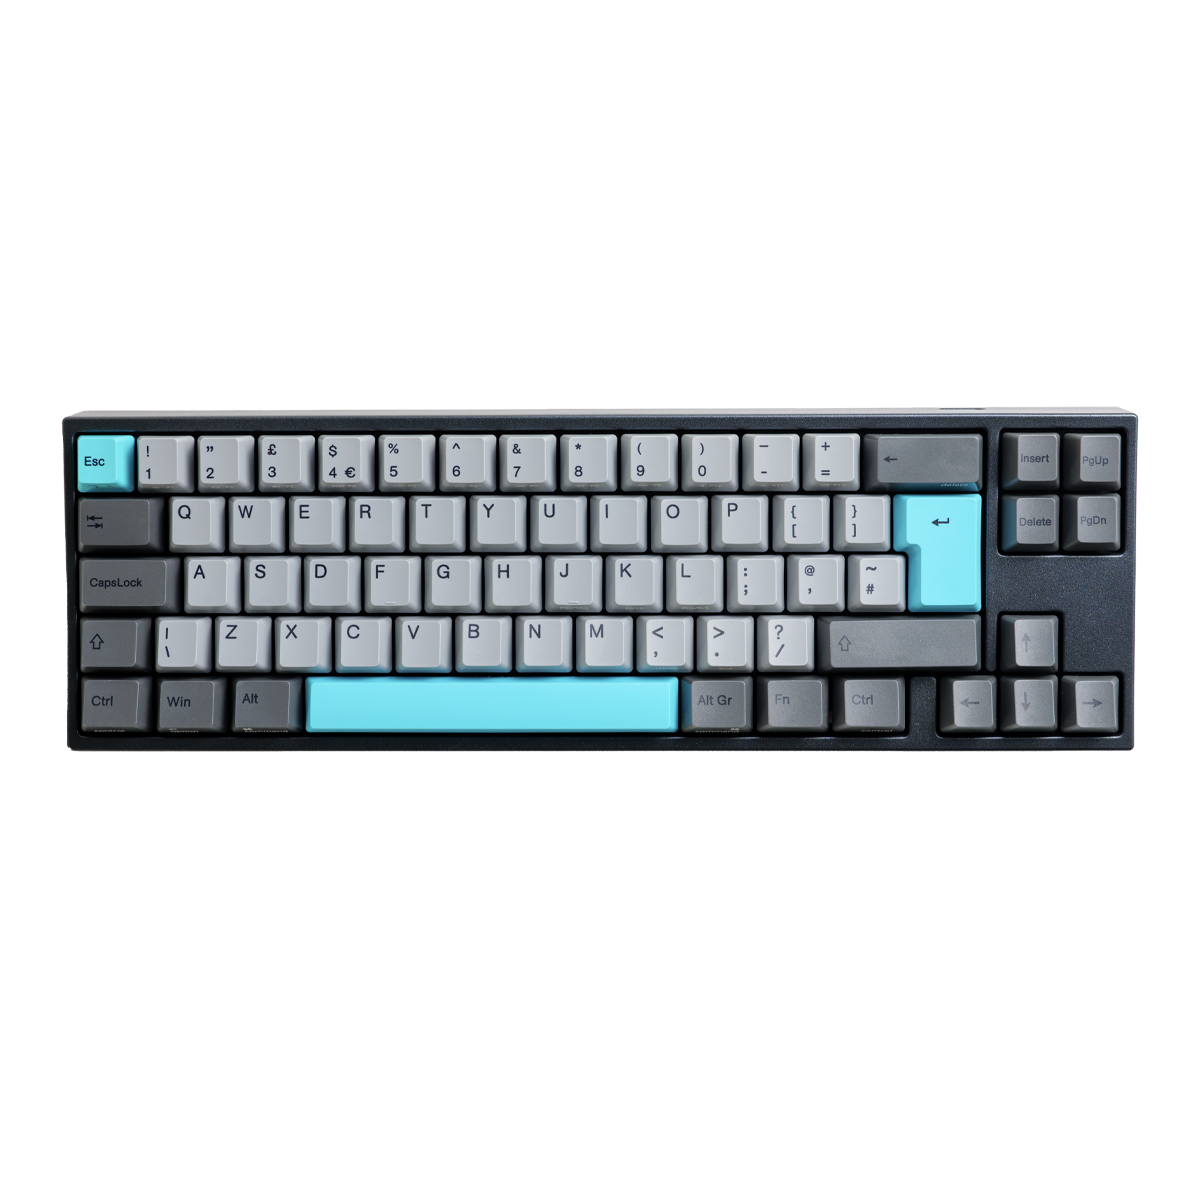 Ducky x Varmilo MIYA 69 Pro Moonlight 65% Cherry MX Brown Switch Gaming Keyboard